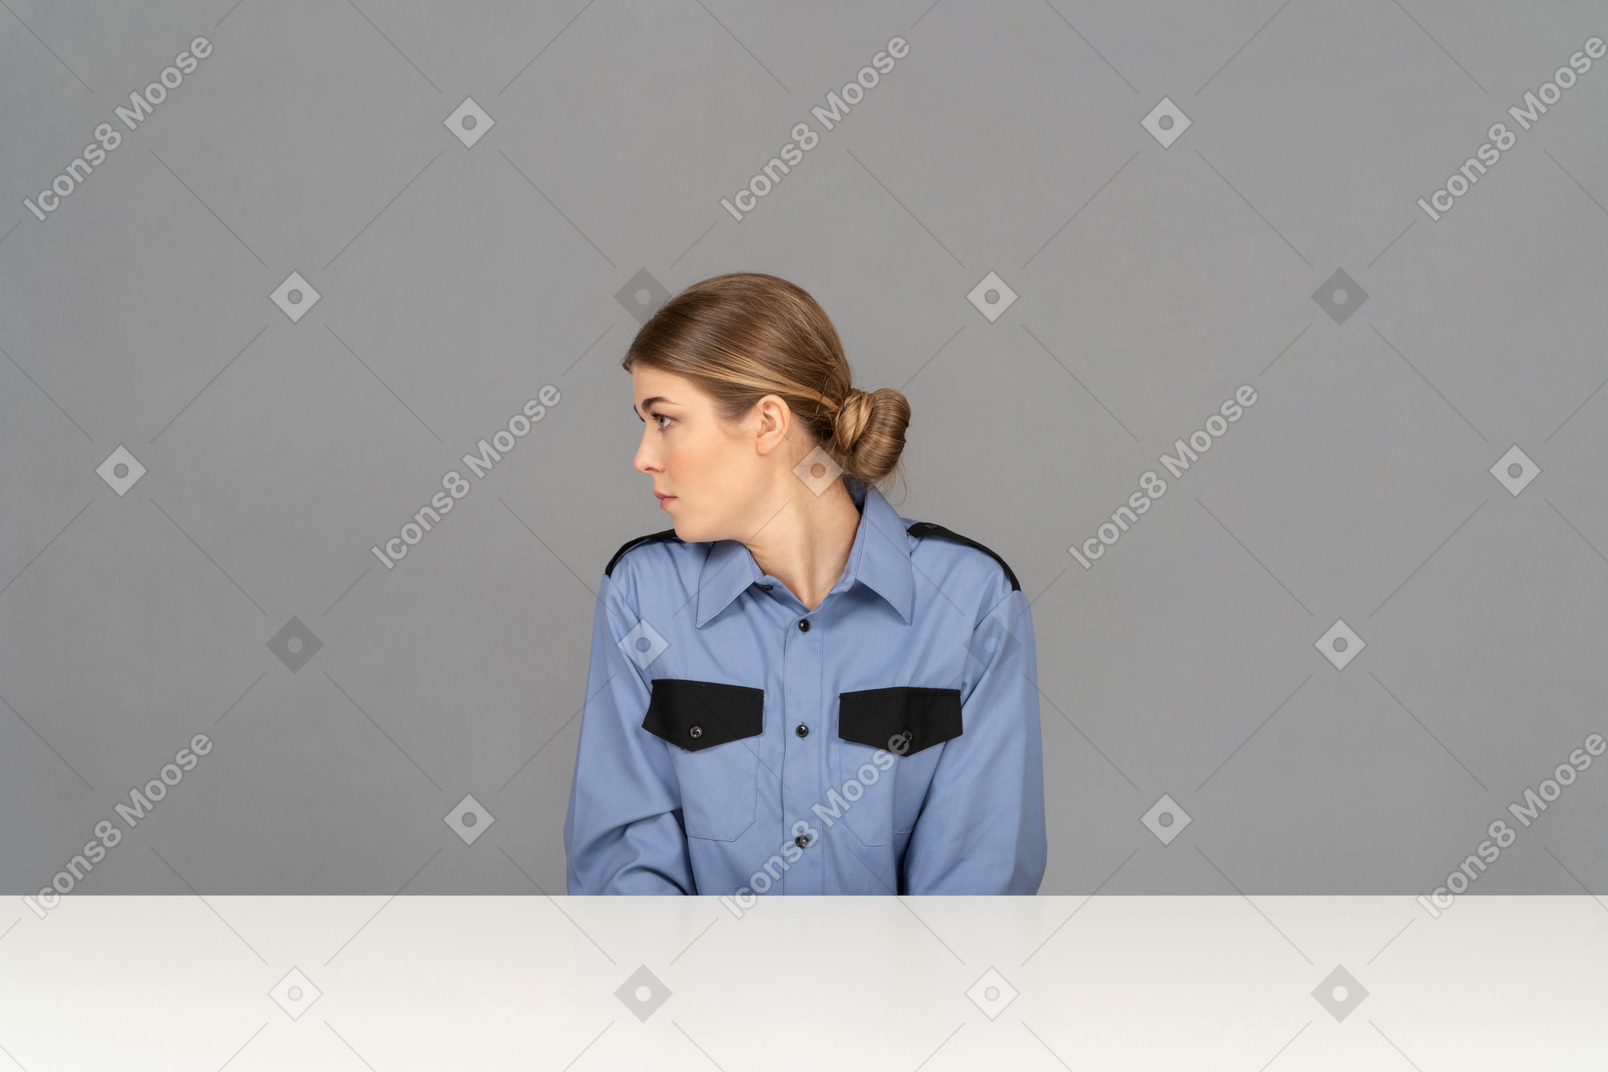 A female security guard looking sideways